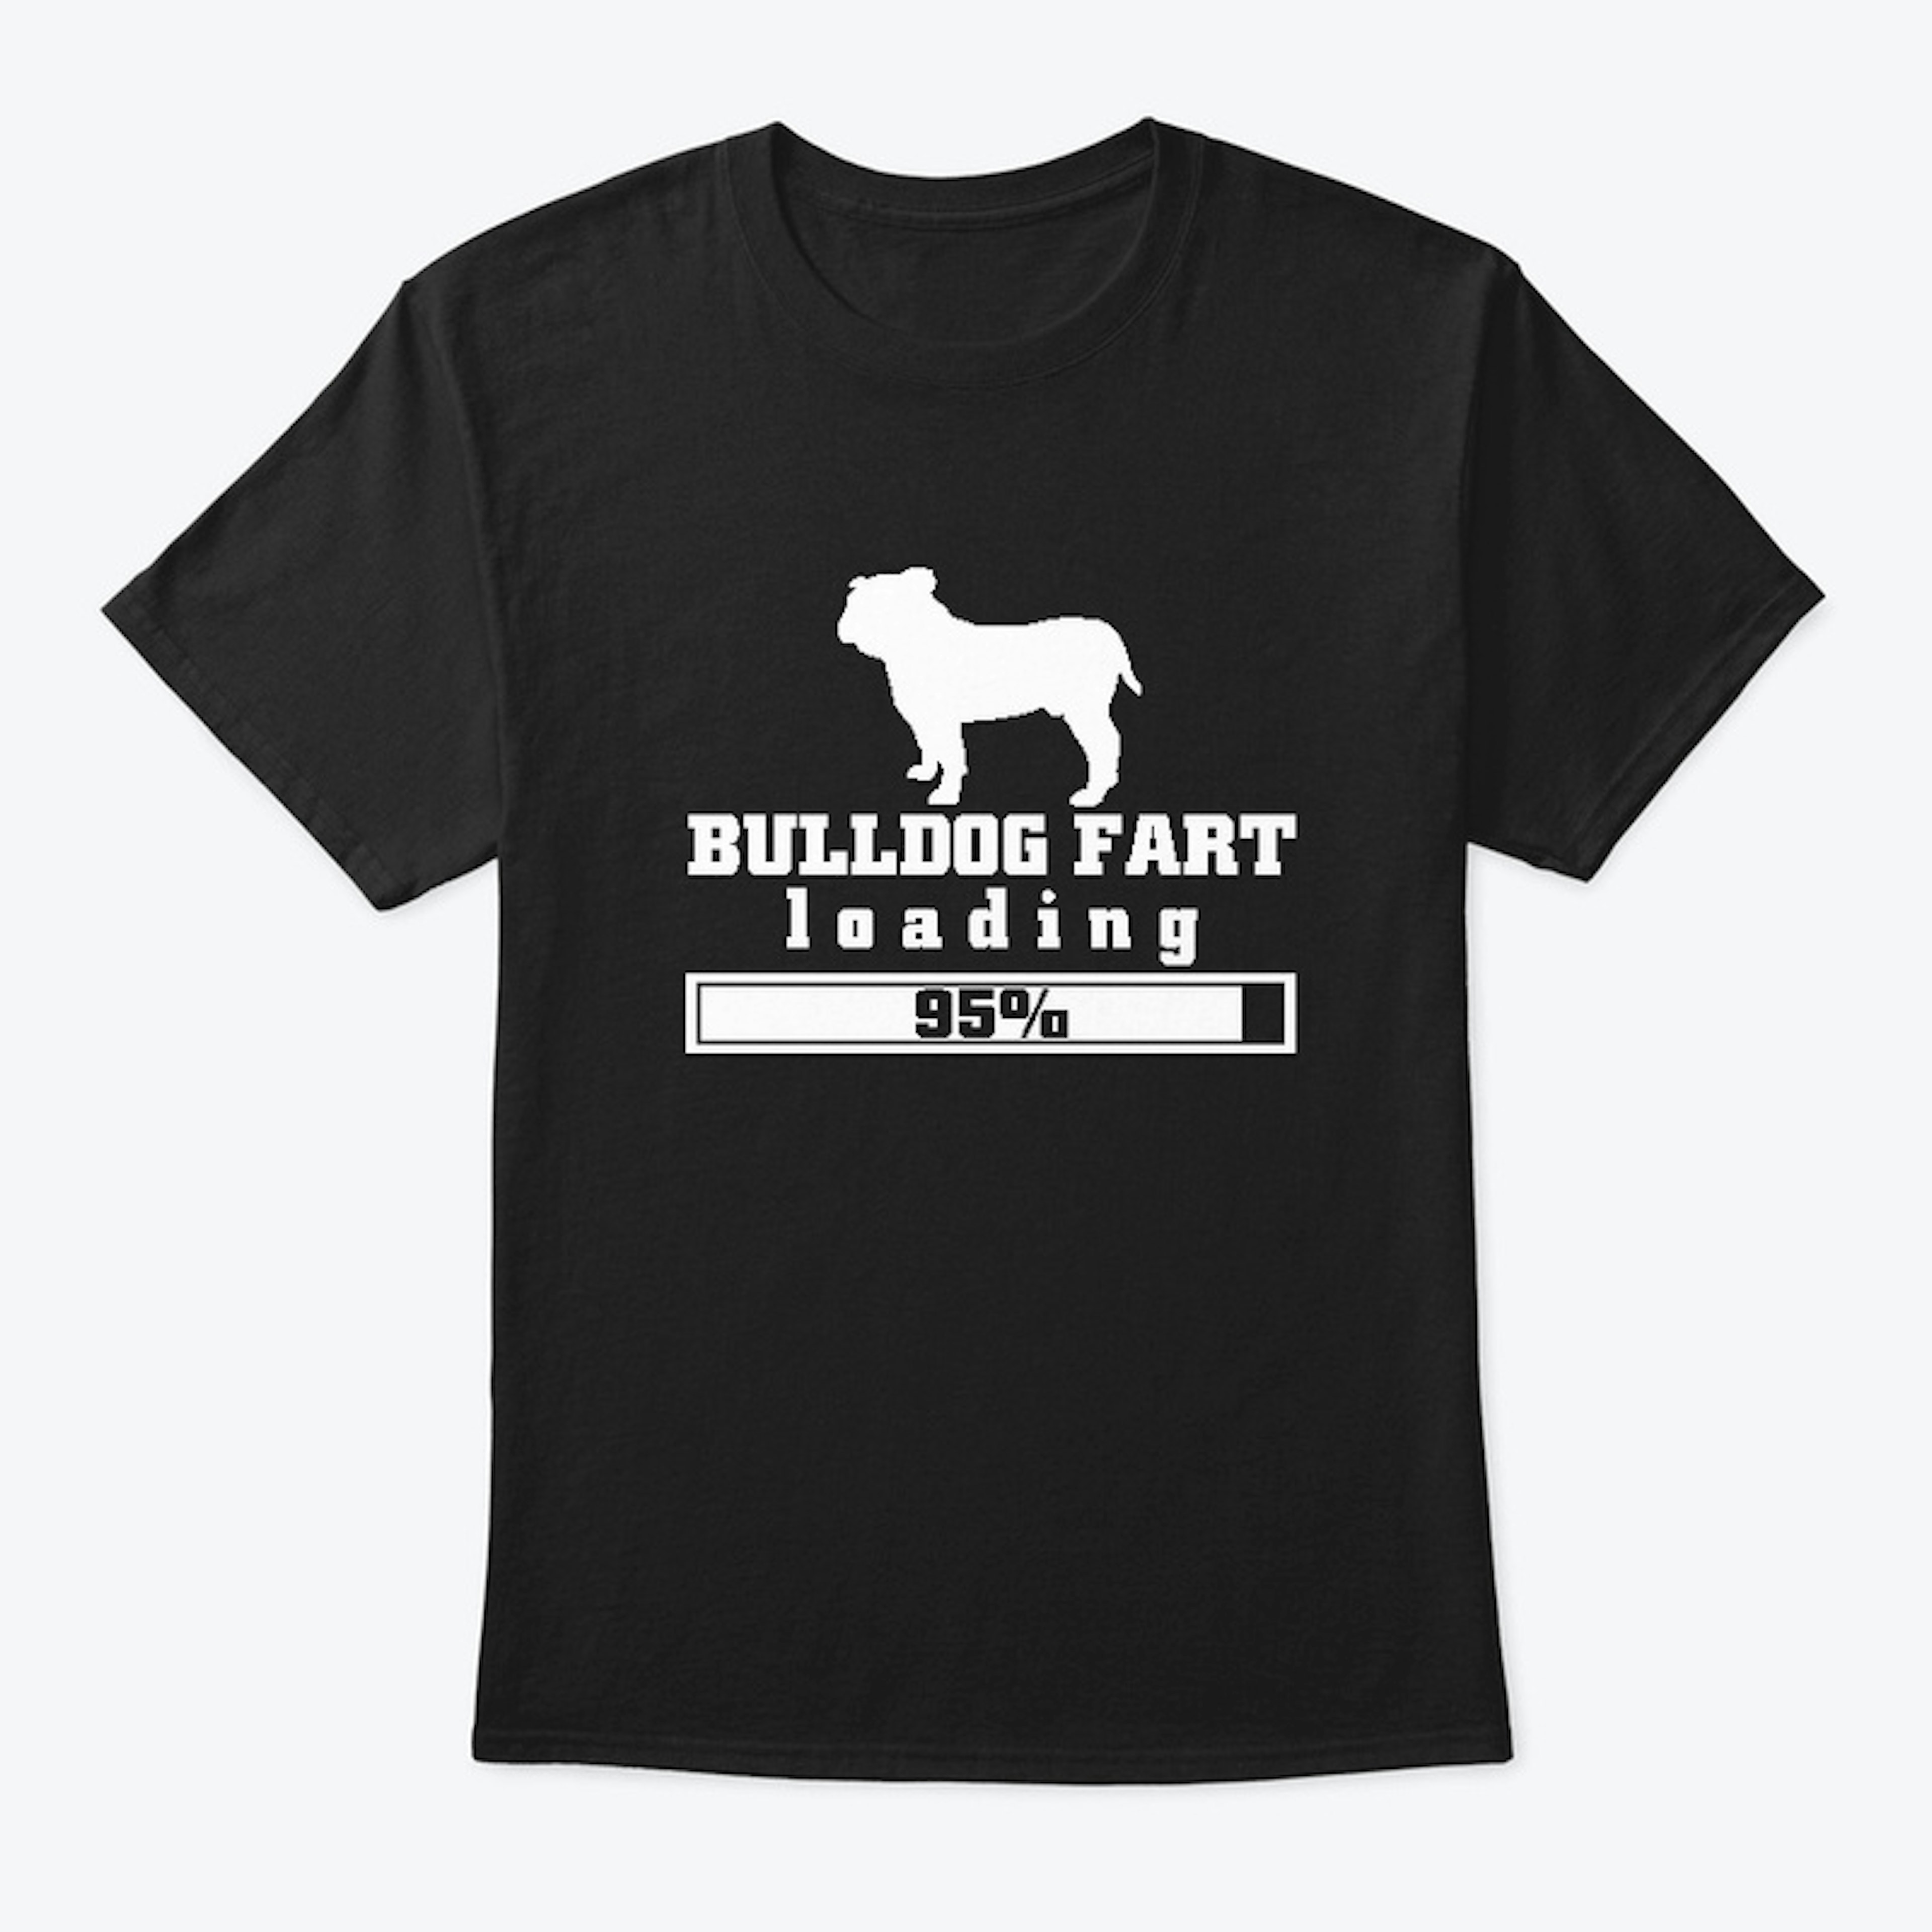 Bulldog fart loading t shirt